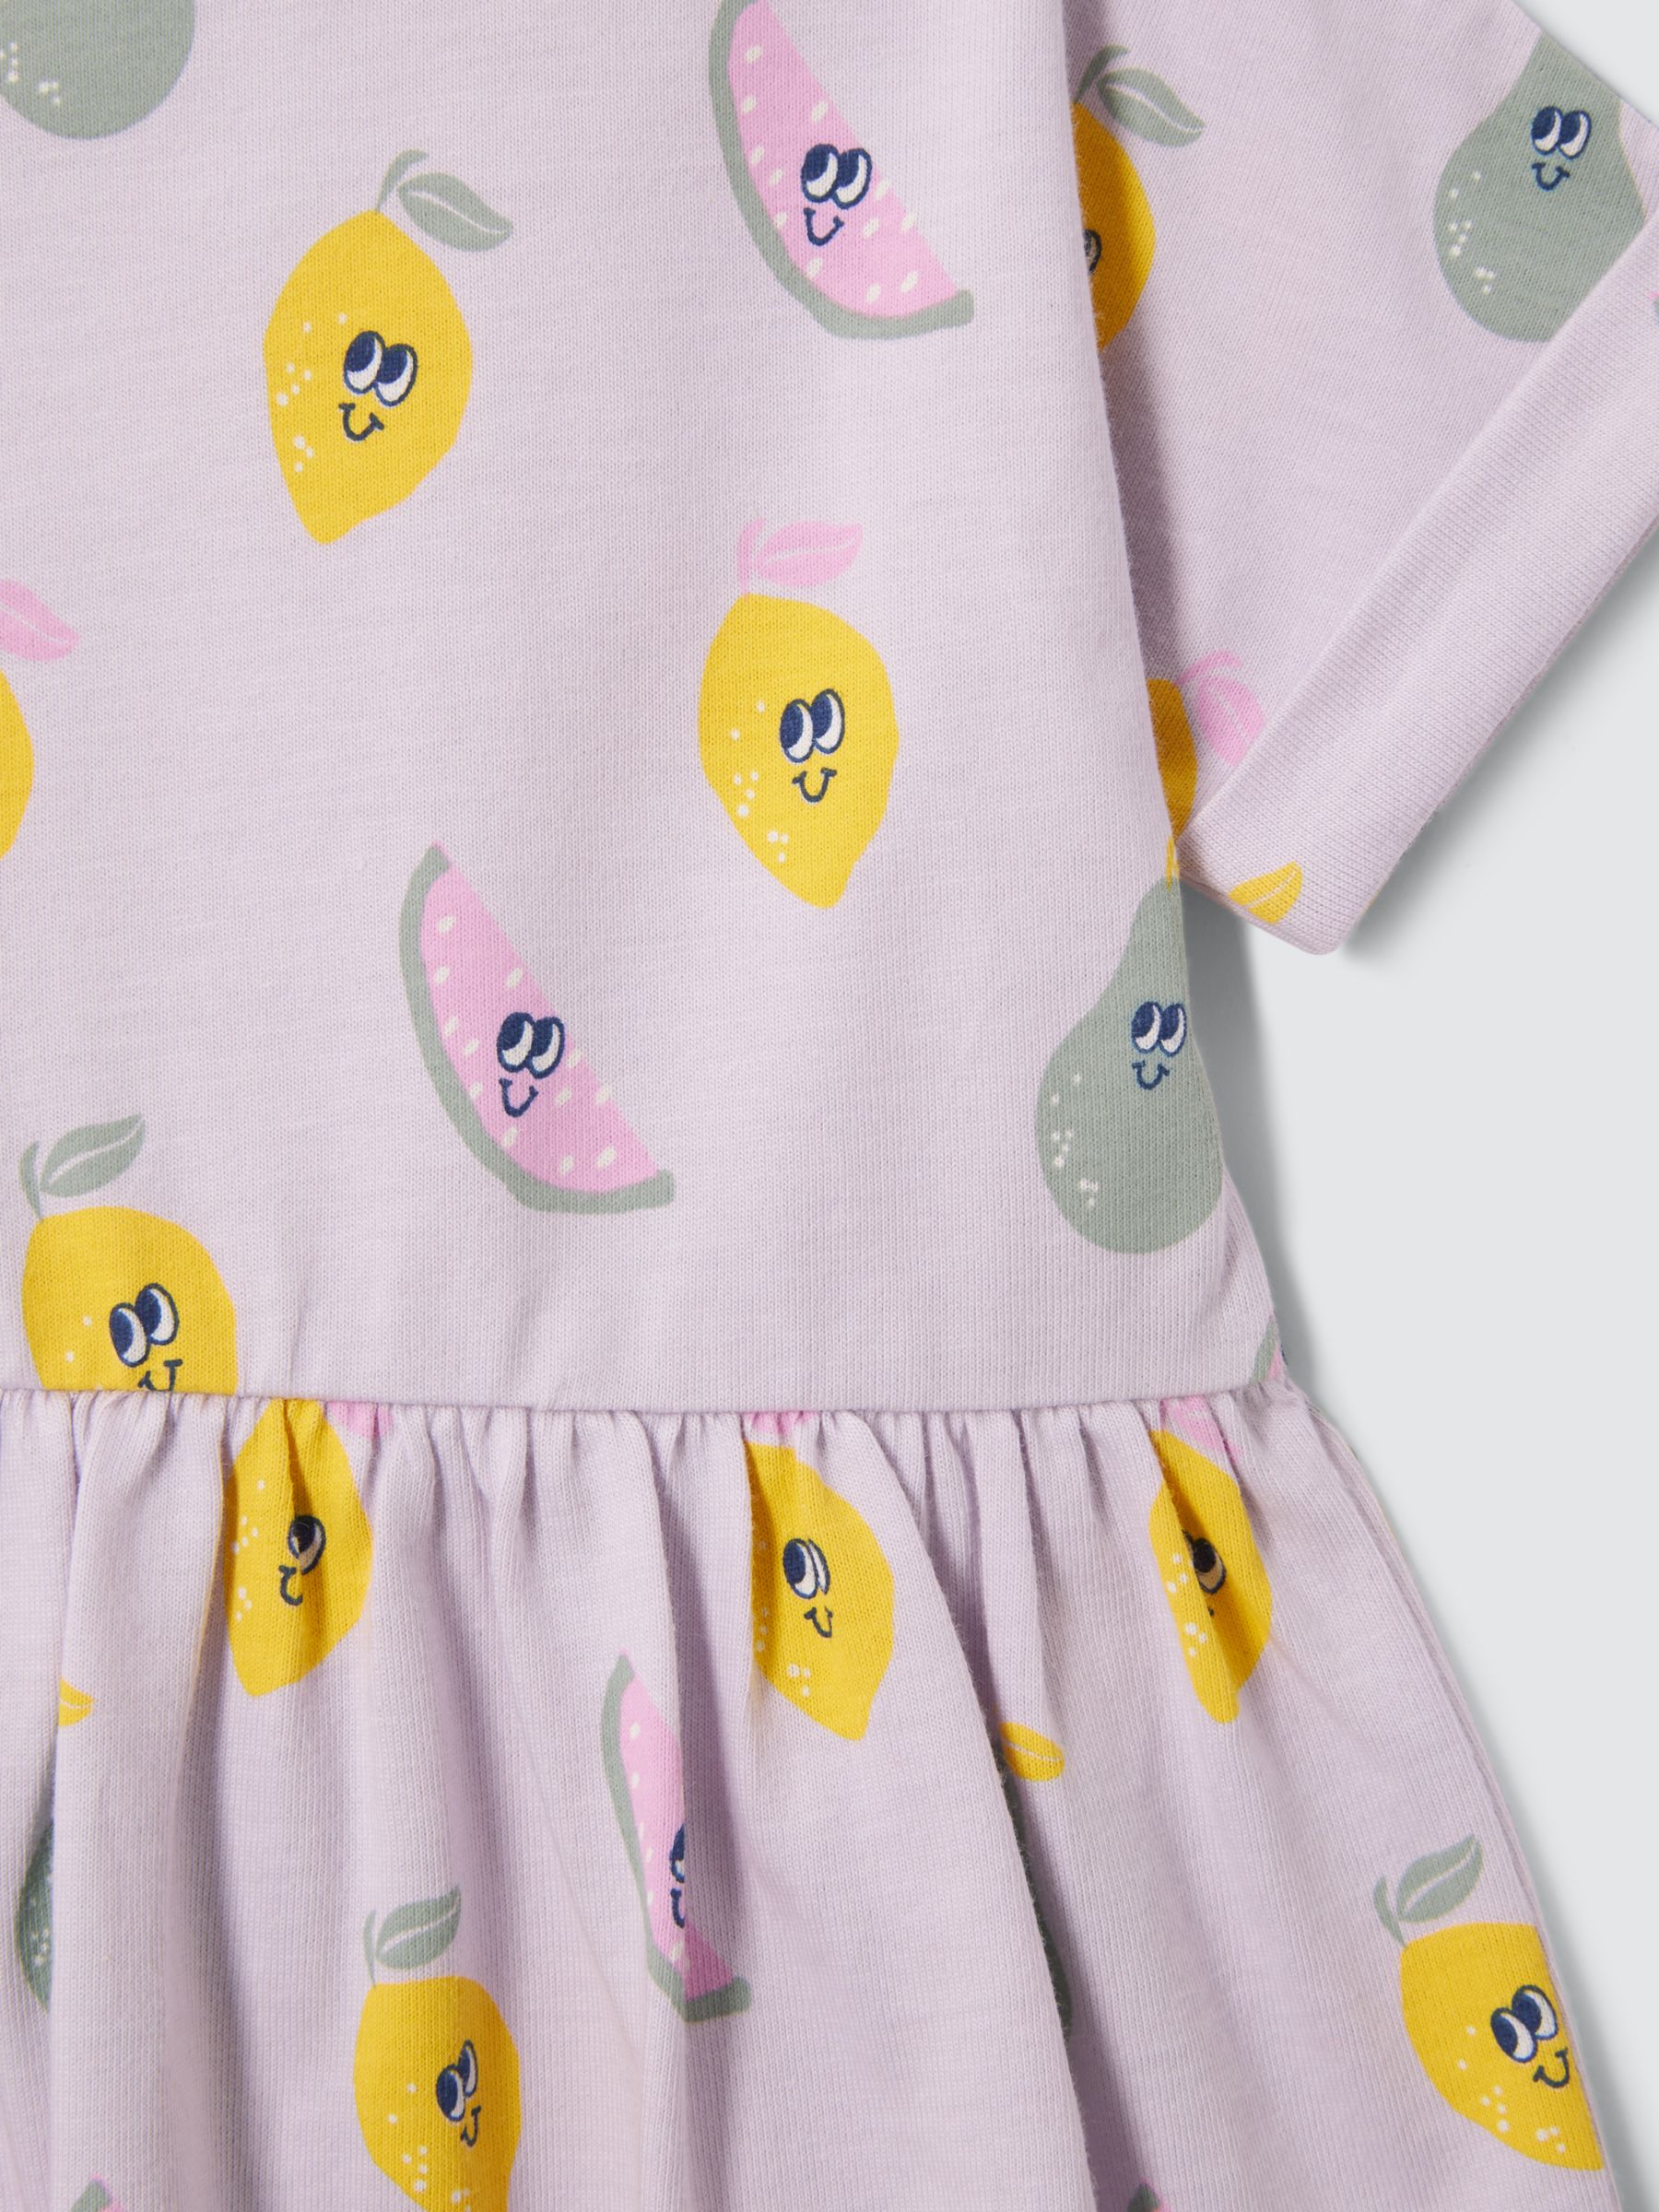 John Lewis ANYDAY Baby Fruit Print Dress, Multi, 6-9 months